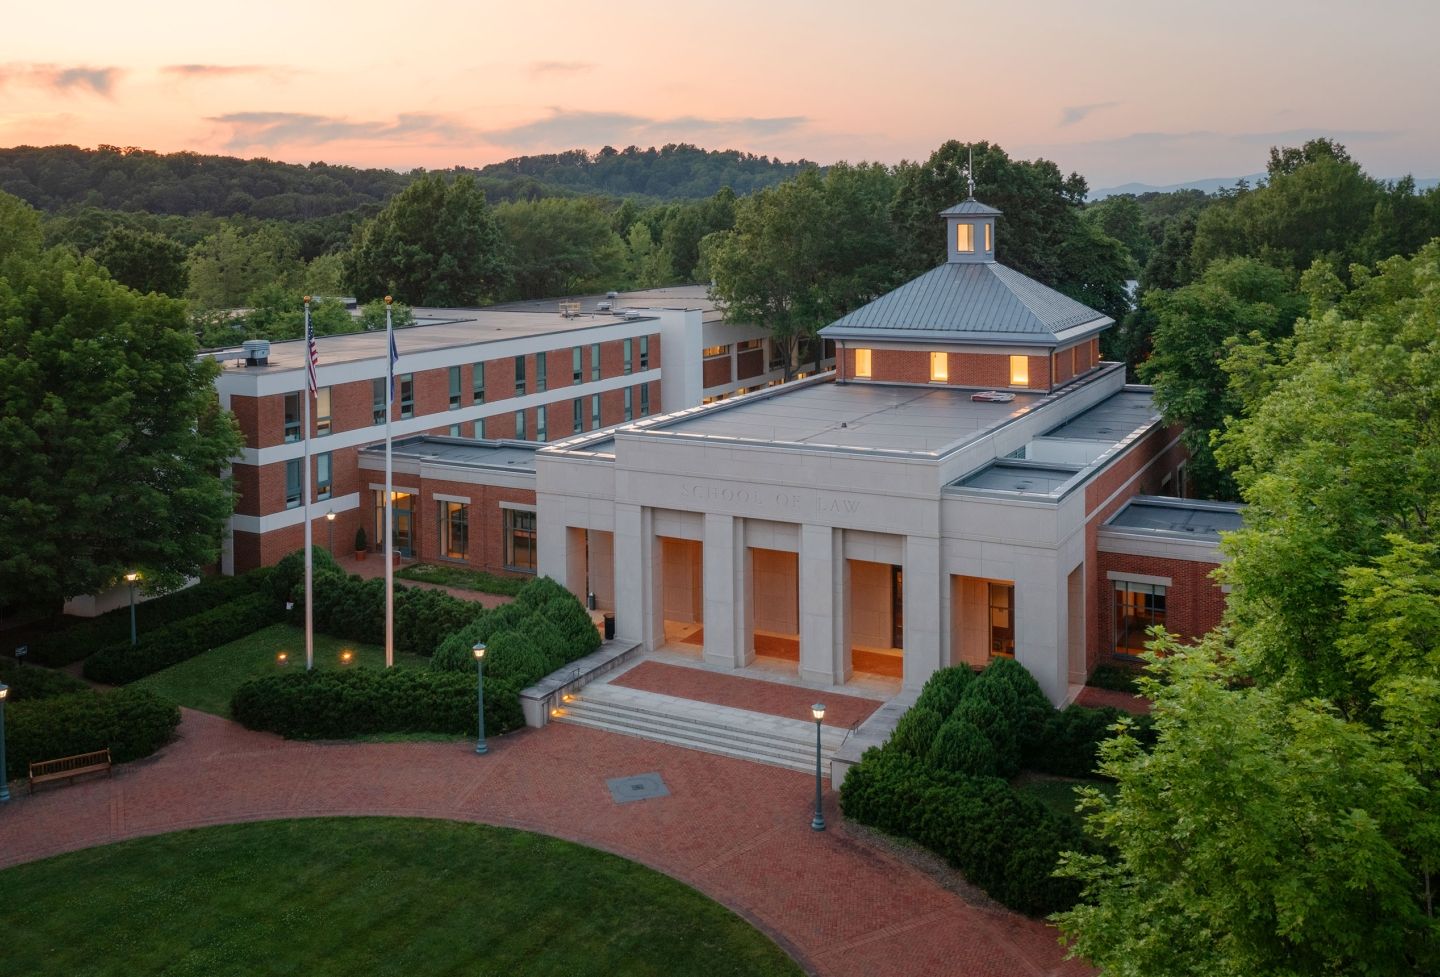 UVA Law School at sunset